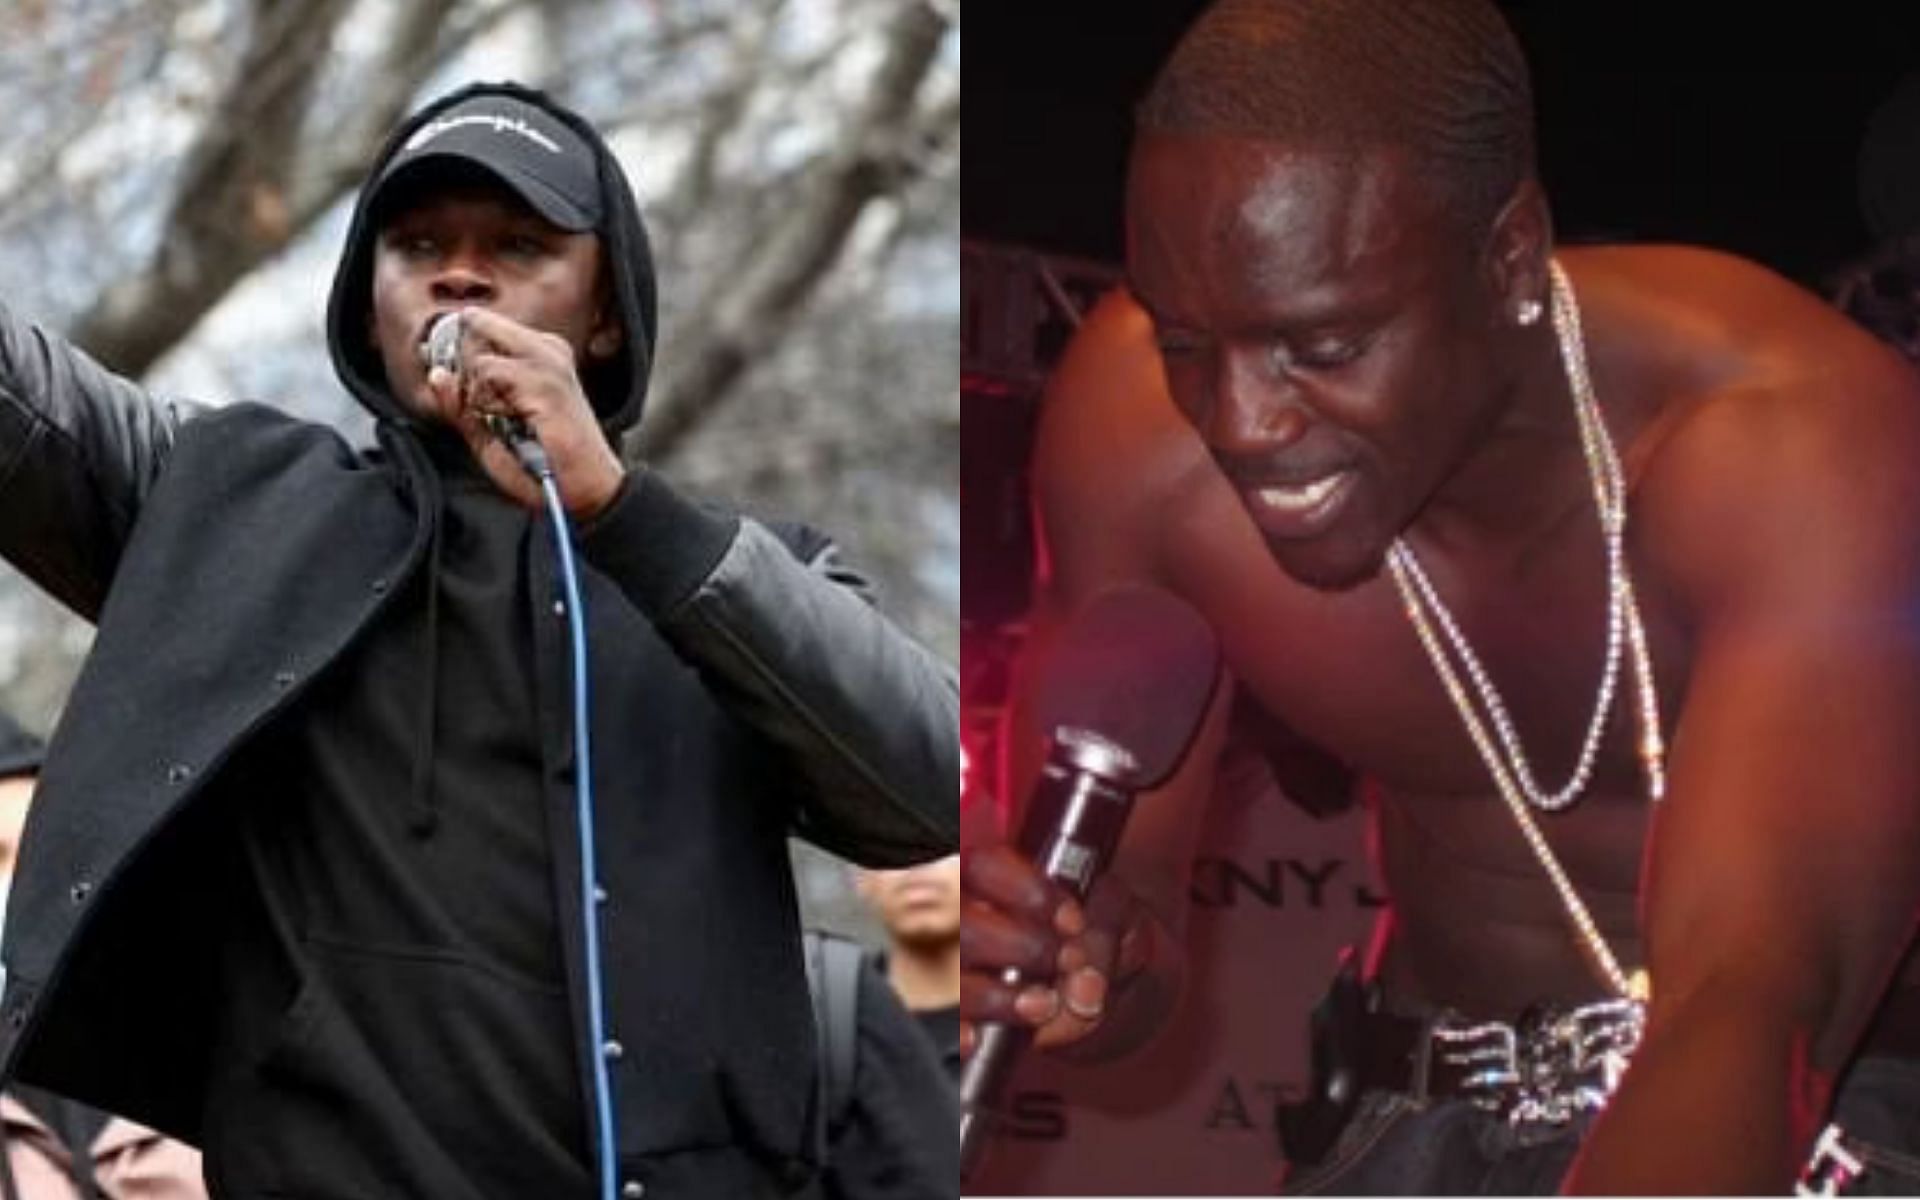 Israel Adesanya (left) and Akon (right) [Akon image courtesy - Shutterstock]